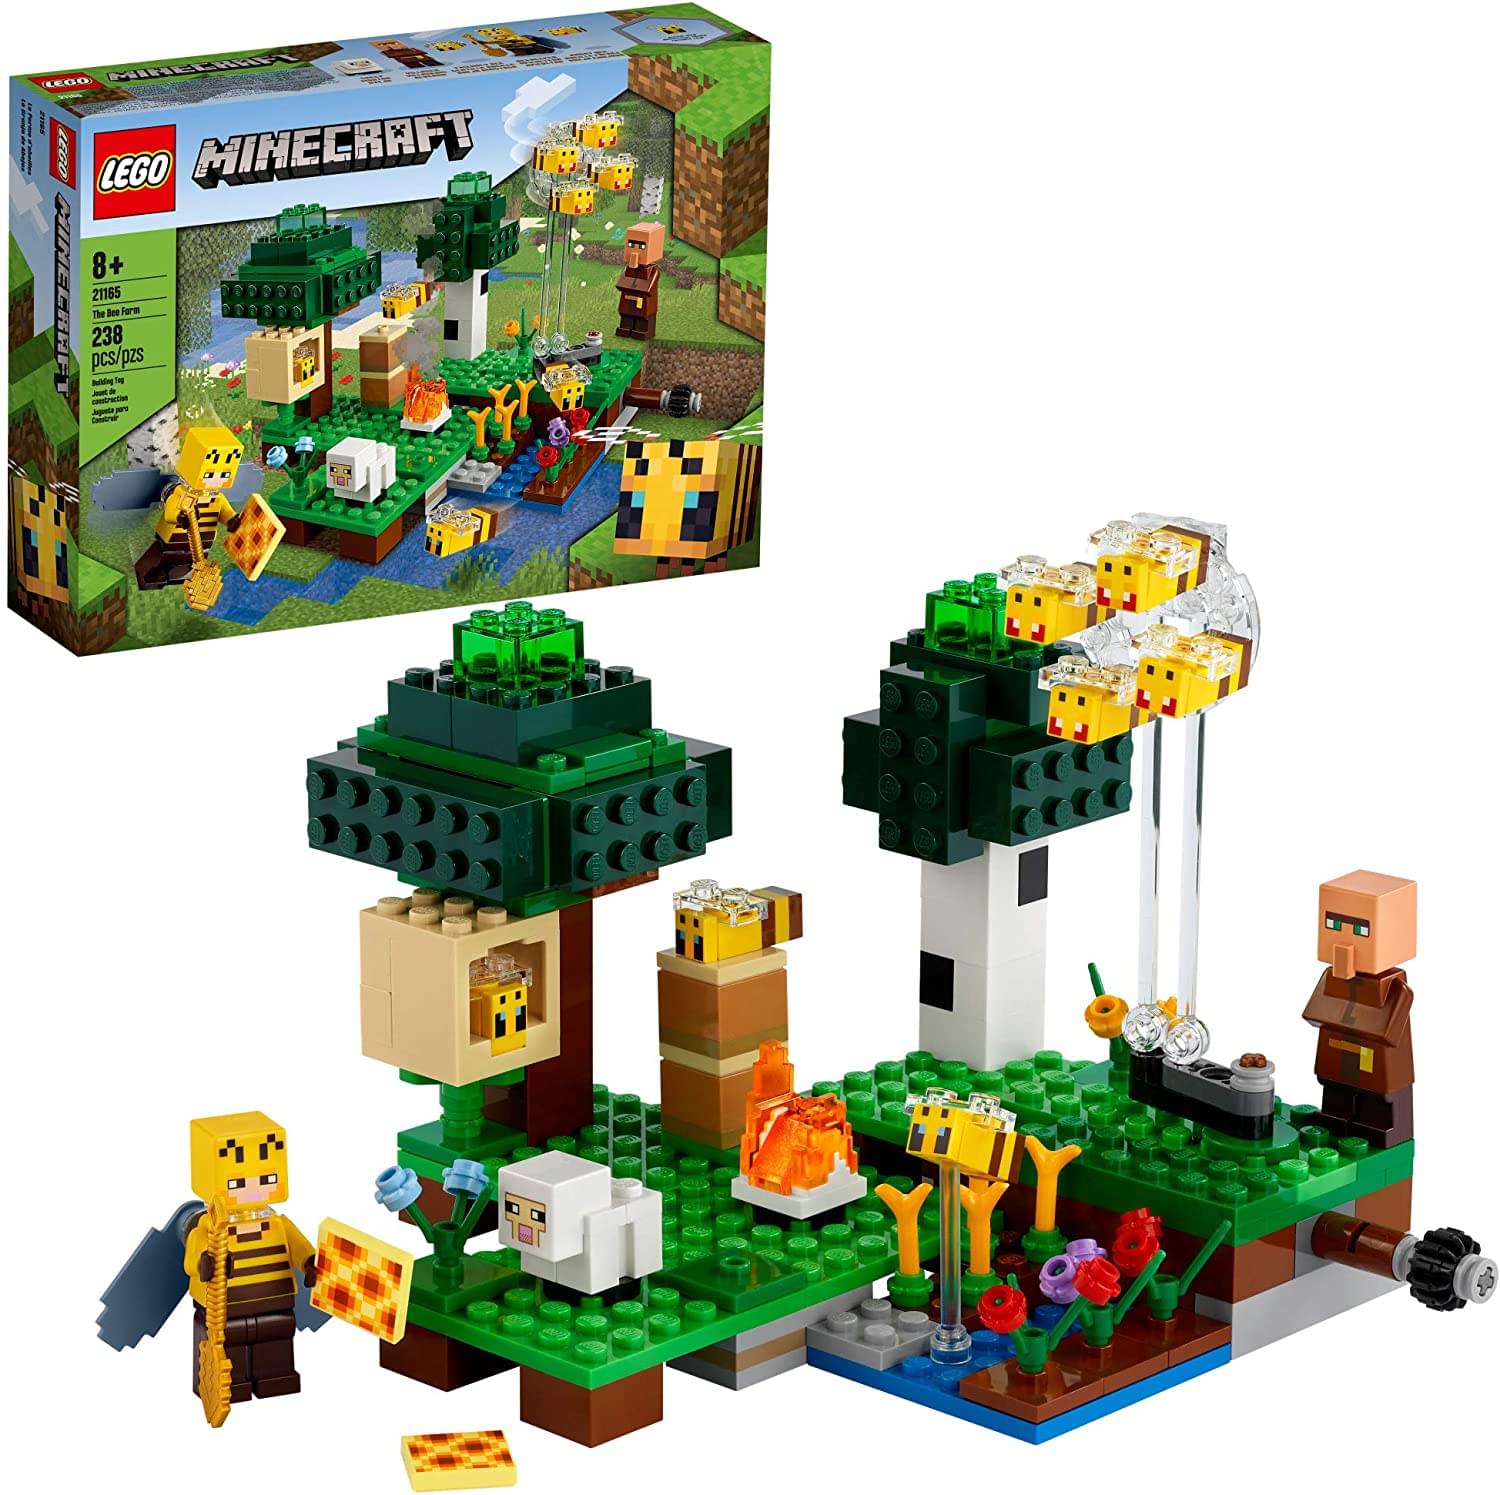 LEGO Minecraft 21165 The Bee Farm 238 Piece Building Kit